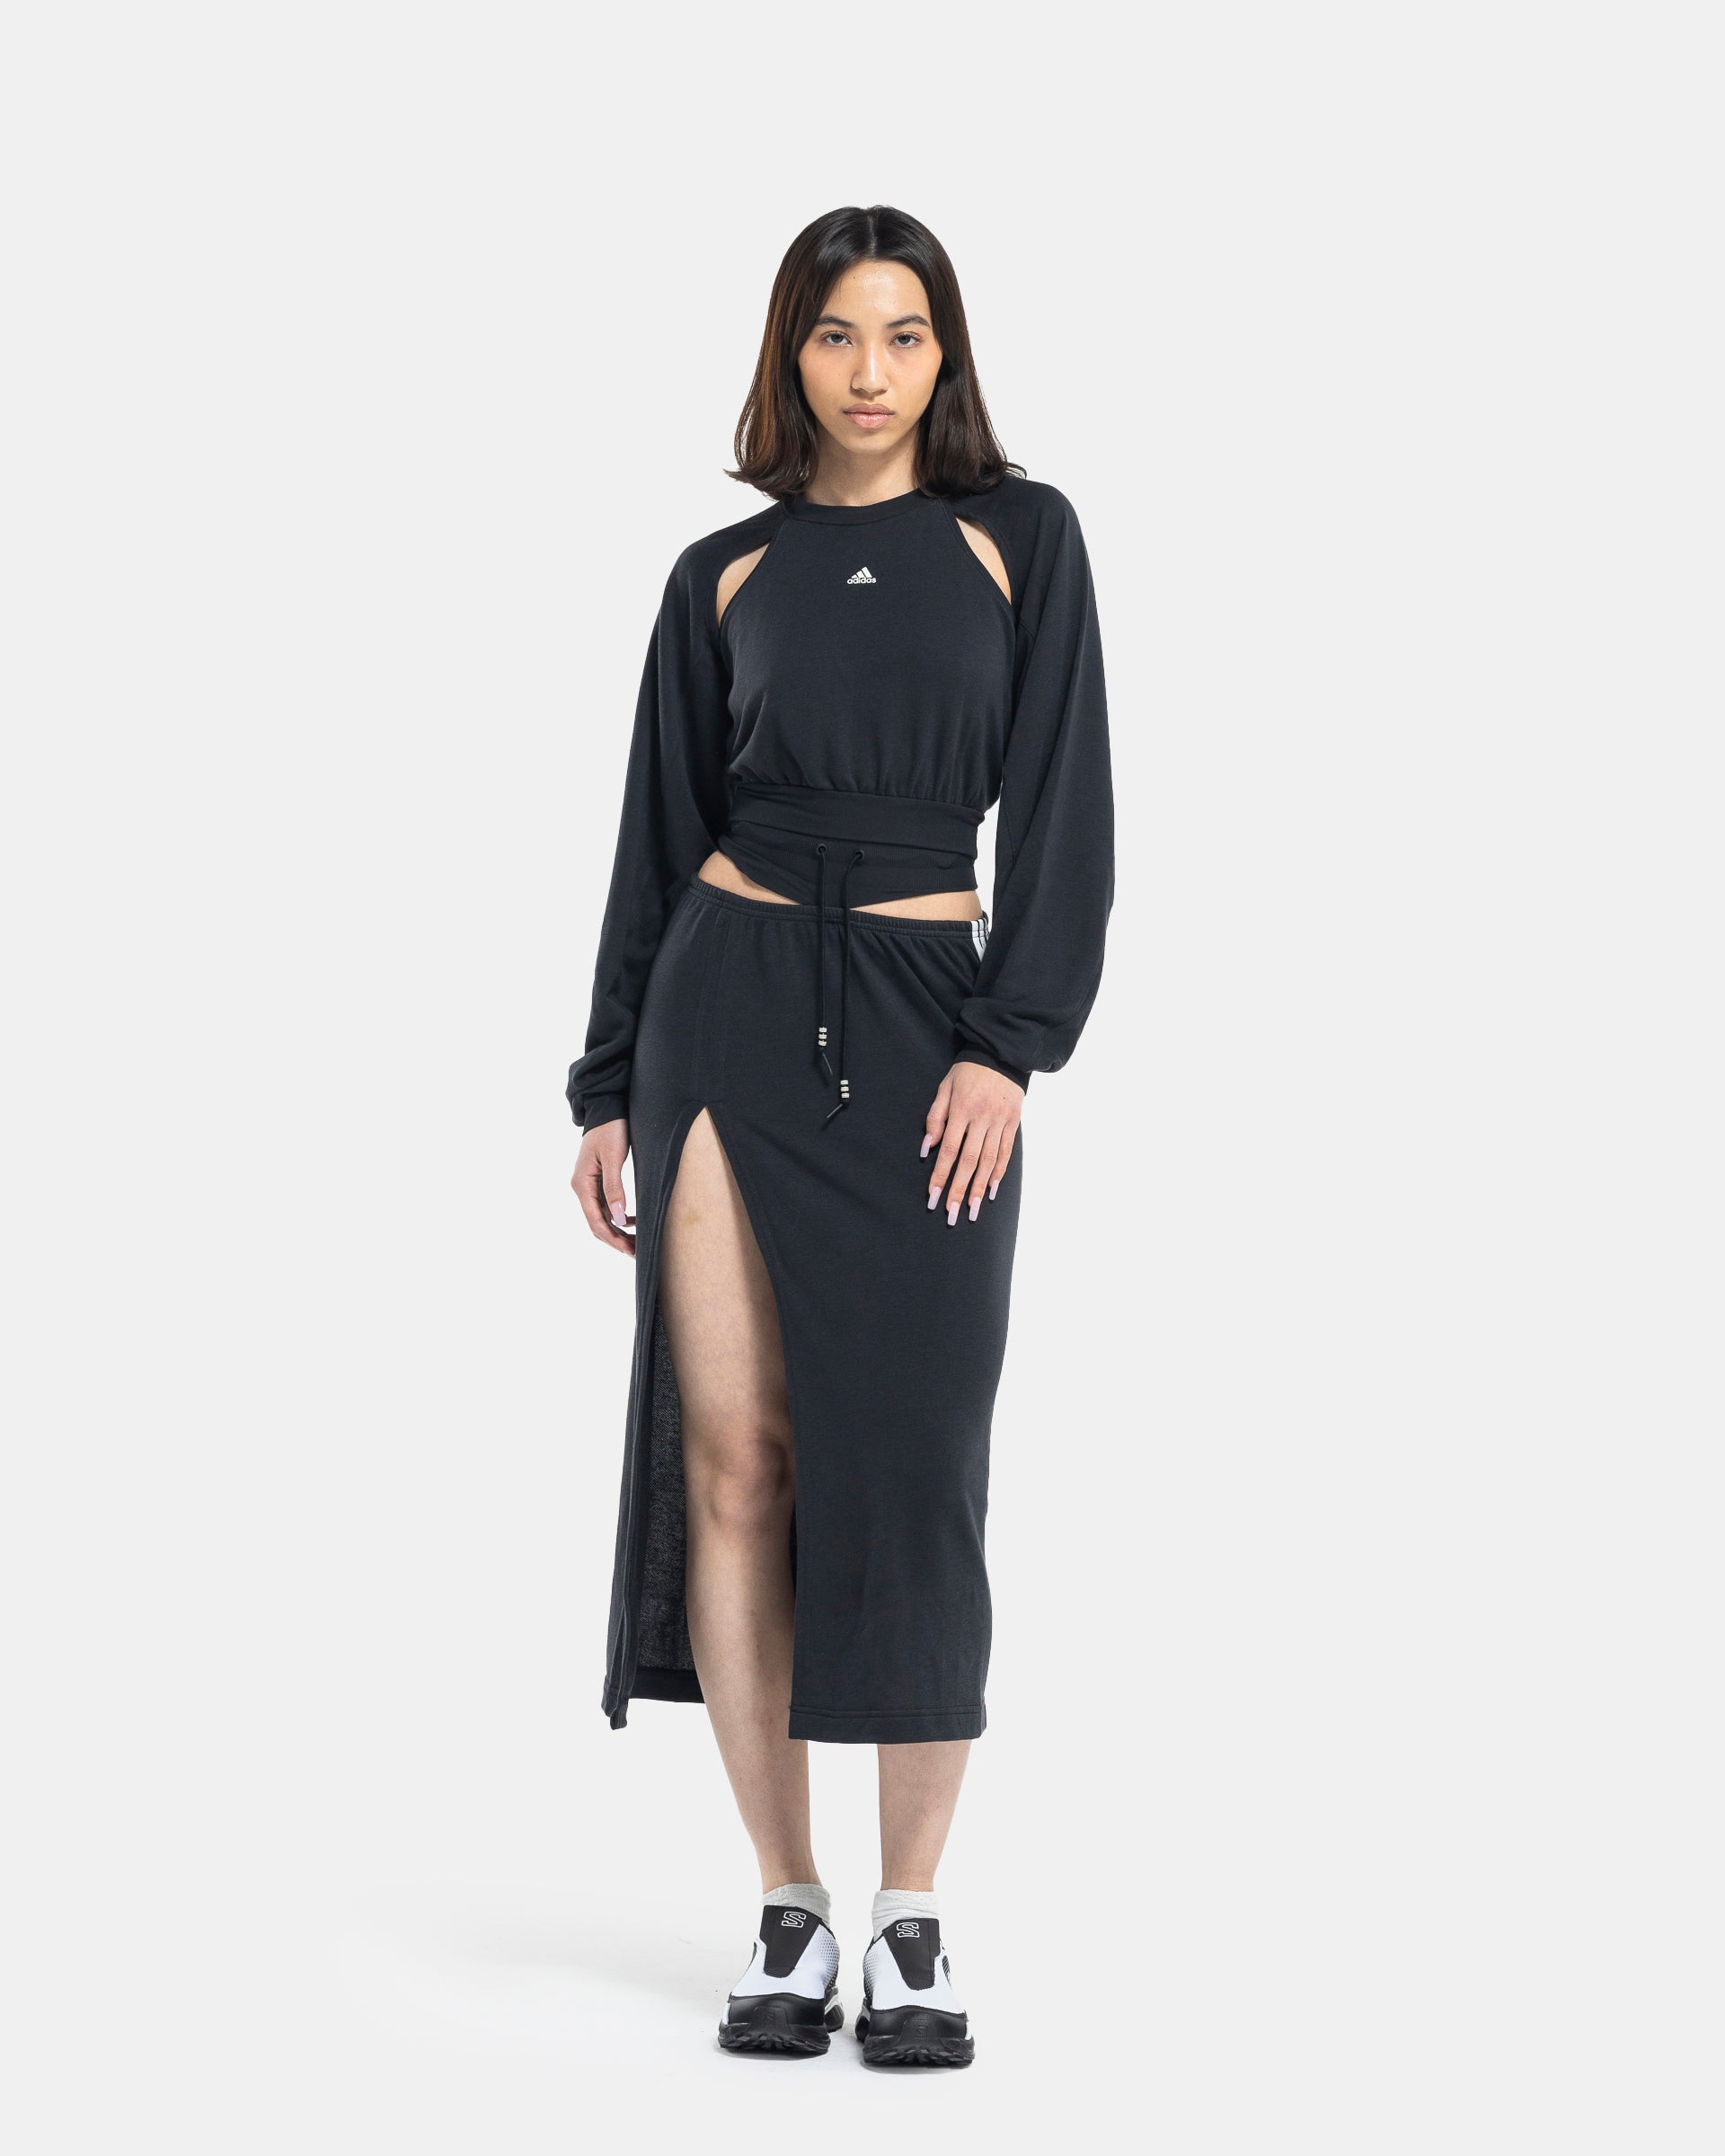 Female model wearing RUI x Adidas Black Skirt on white background